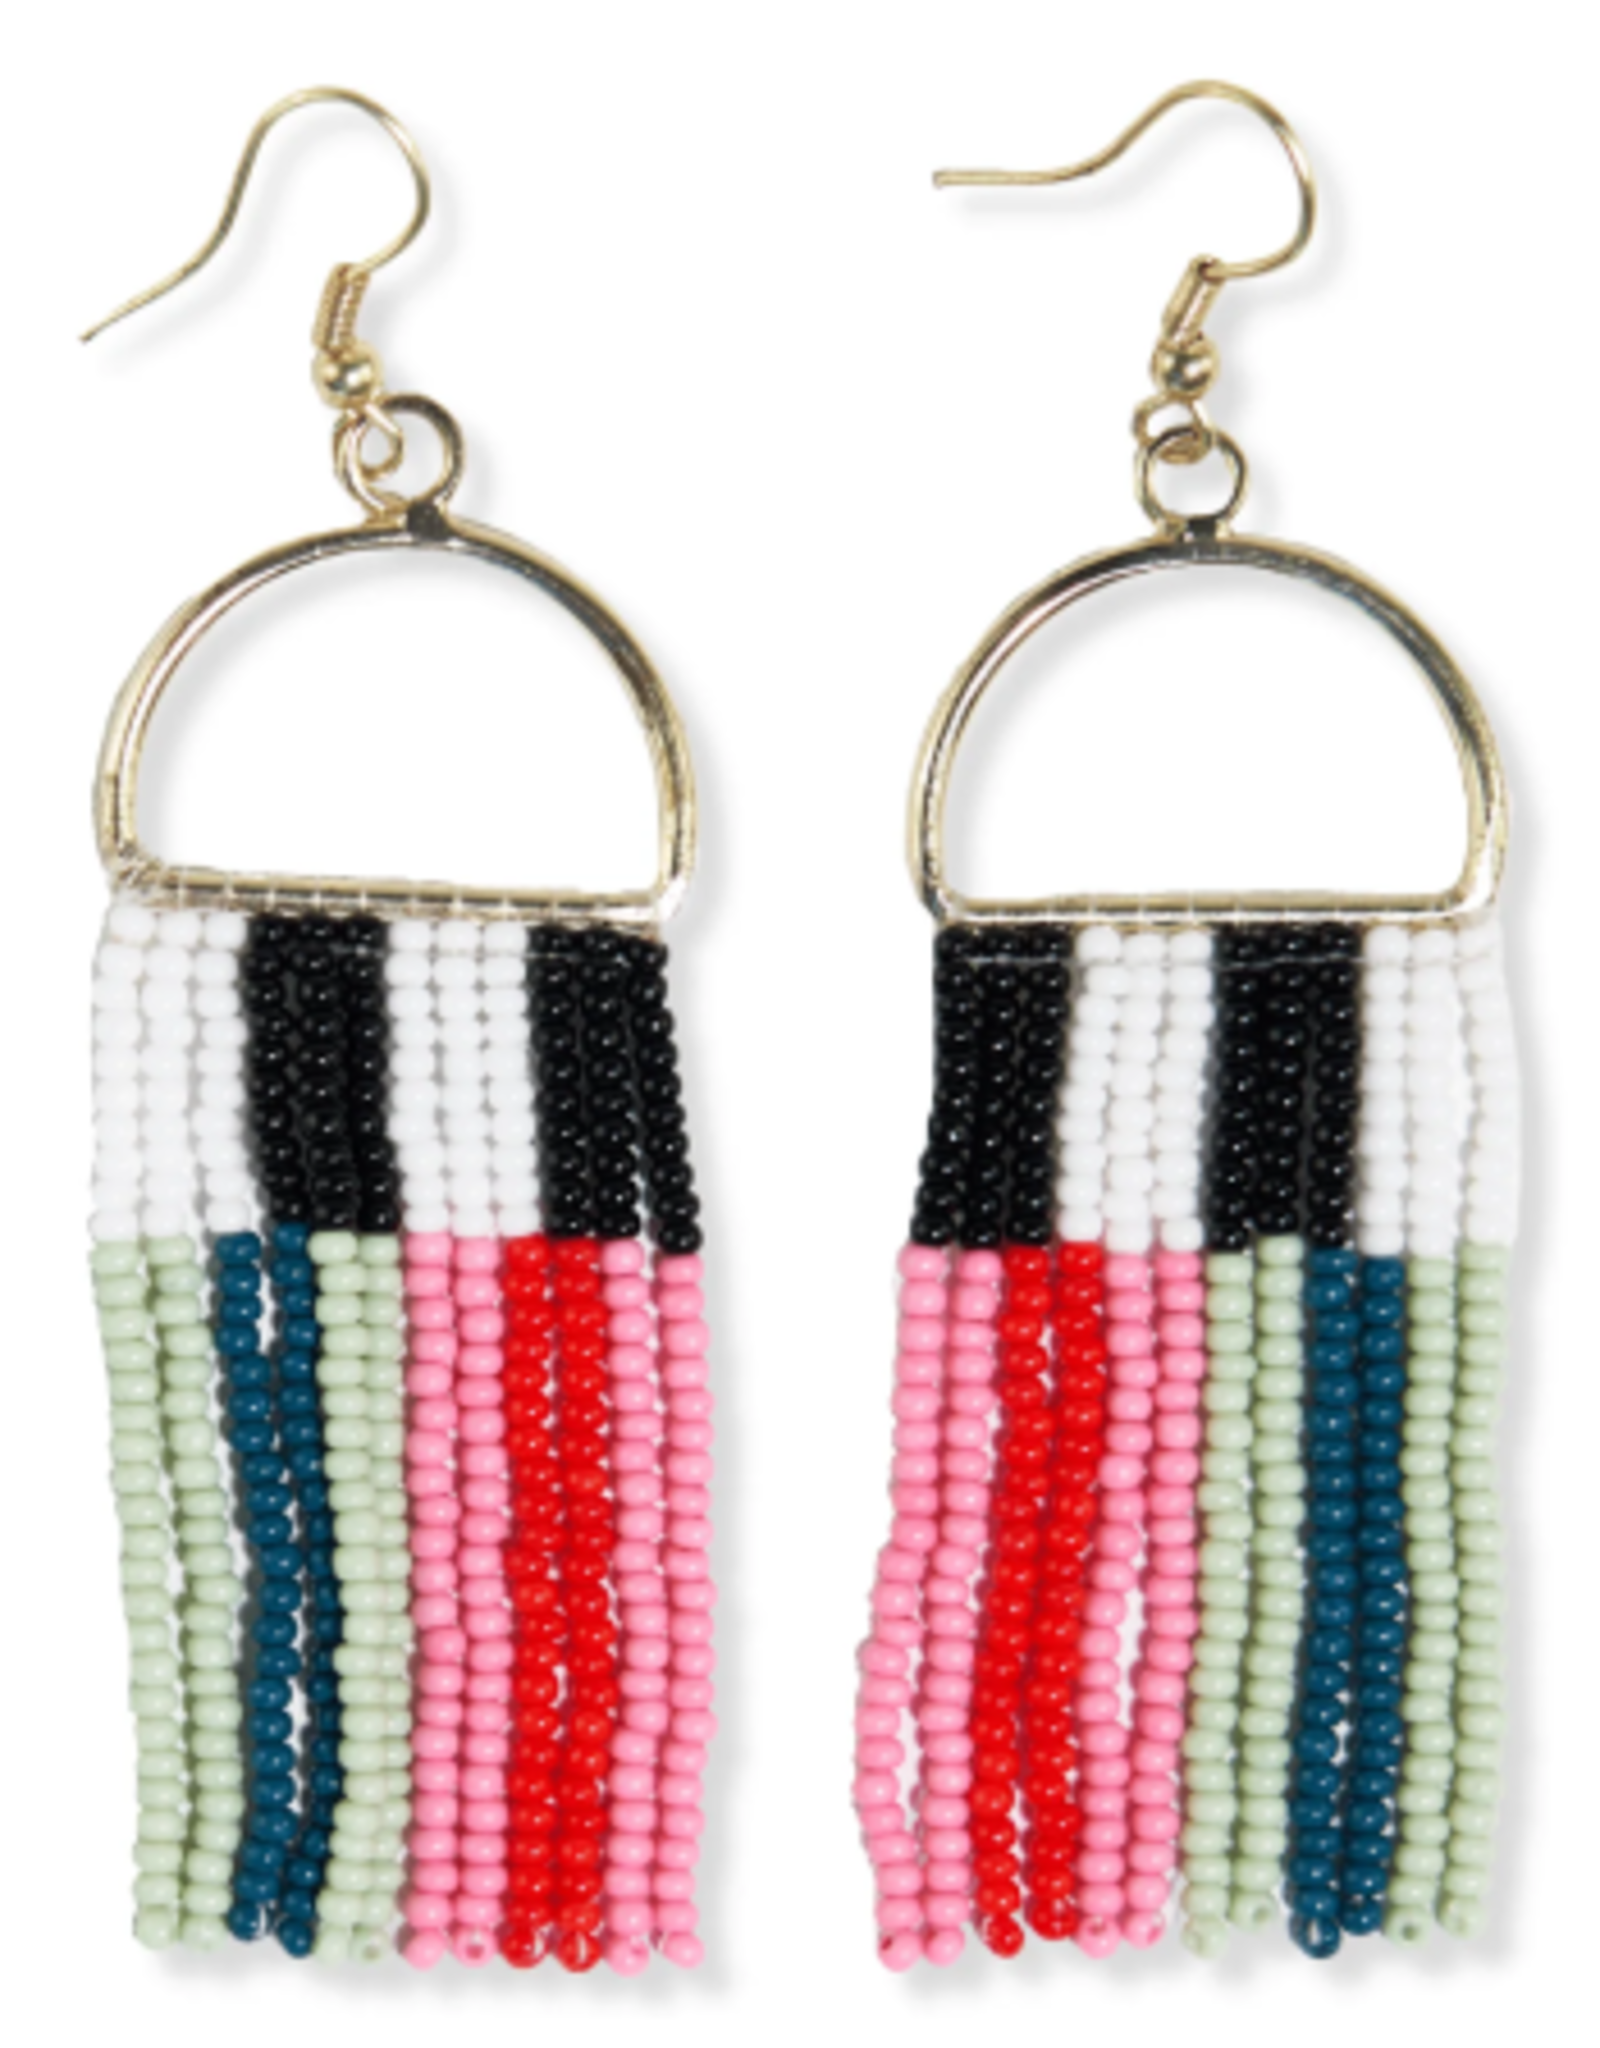 Ink + Alloy Earrings - Dangle: Half Circle Vertical Stripes Fringe Red, Mint, Pink, Teal